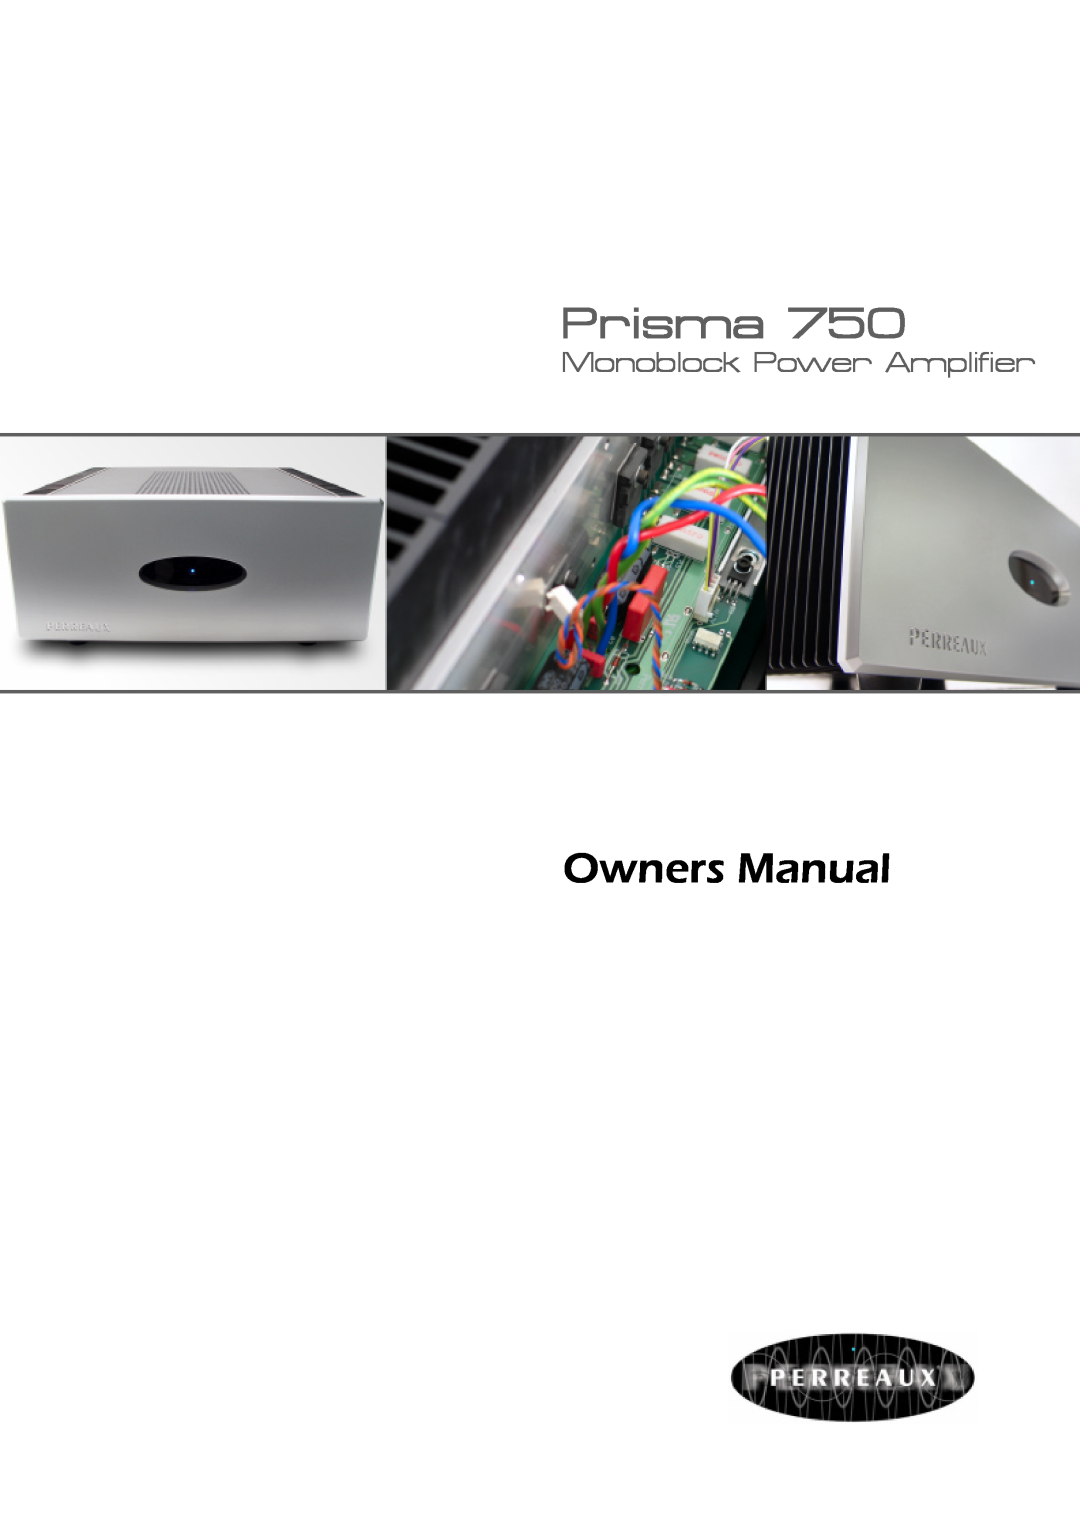 Perreaux 750 owner manual Prisma, Monoblock Power Amplifier 